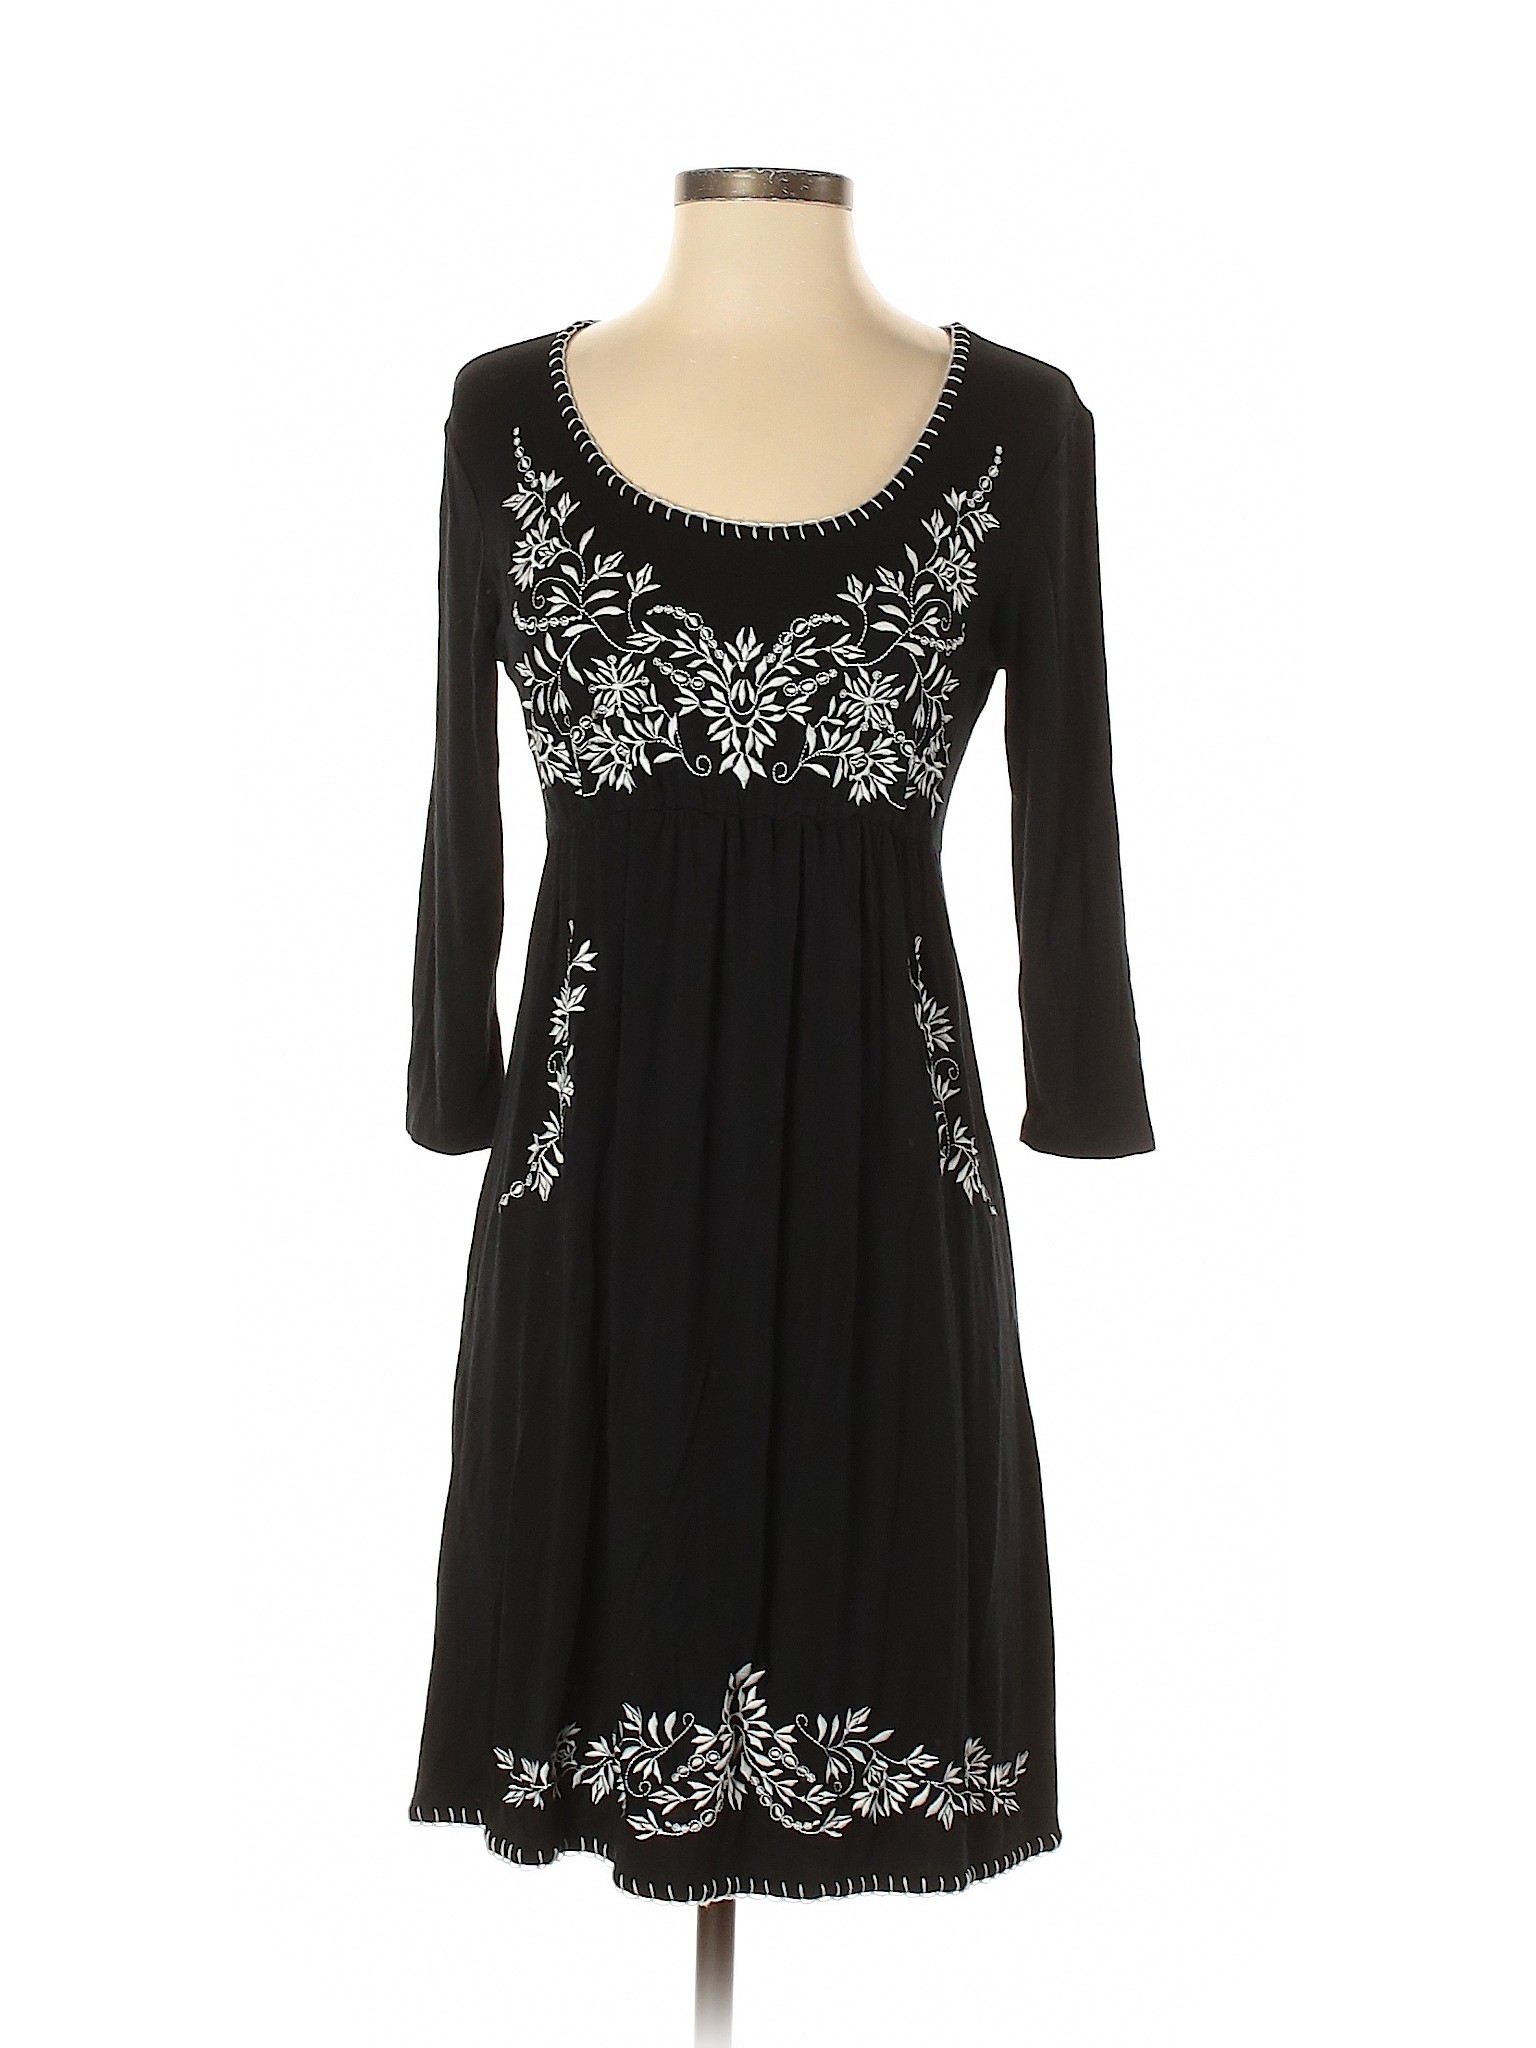 Chelsea & Theodore Women Black Casual Dress Sm Petite | eBay